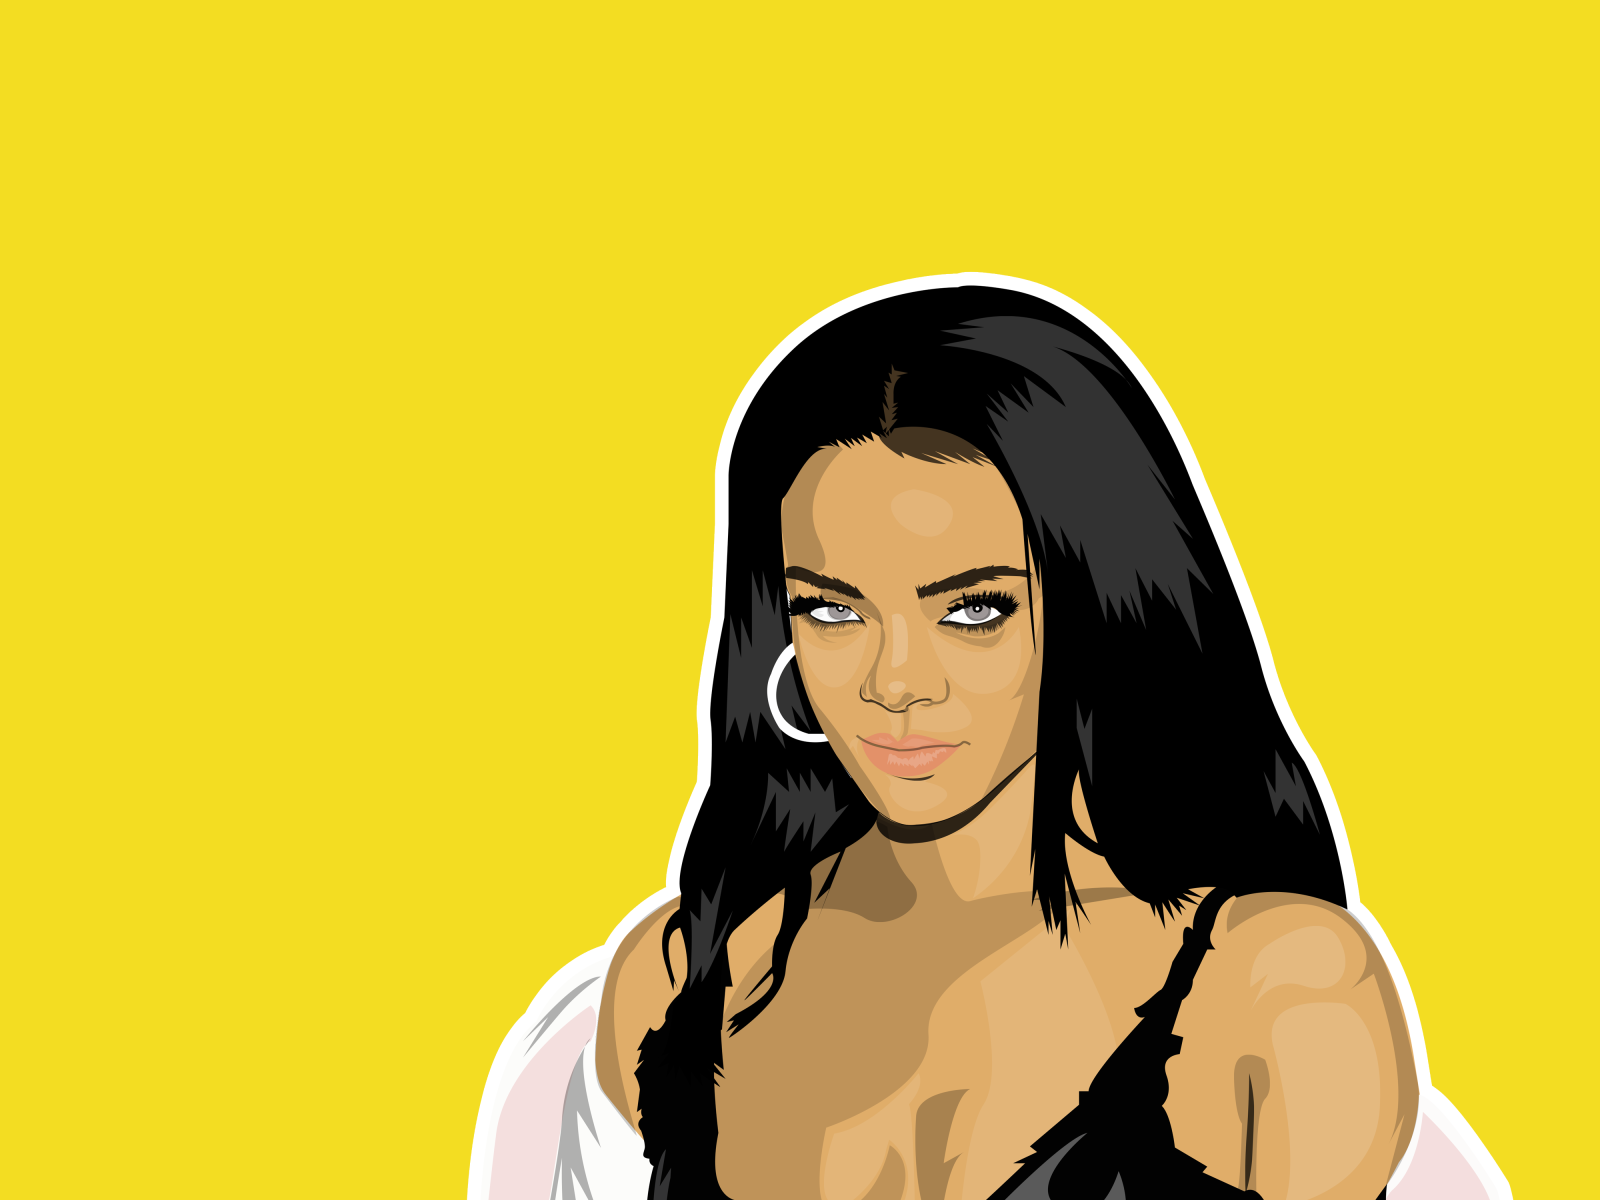 Rihanna Cartoon Portrait Vector by FNH arts by Fnharts on Dribbble